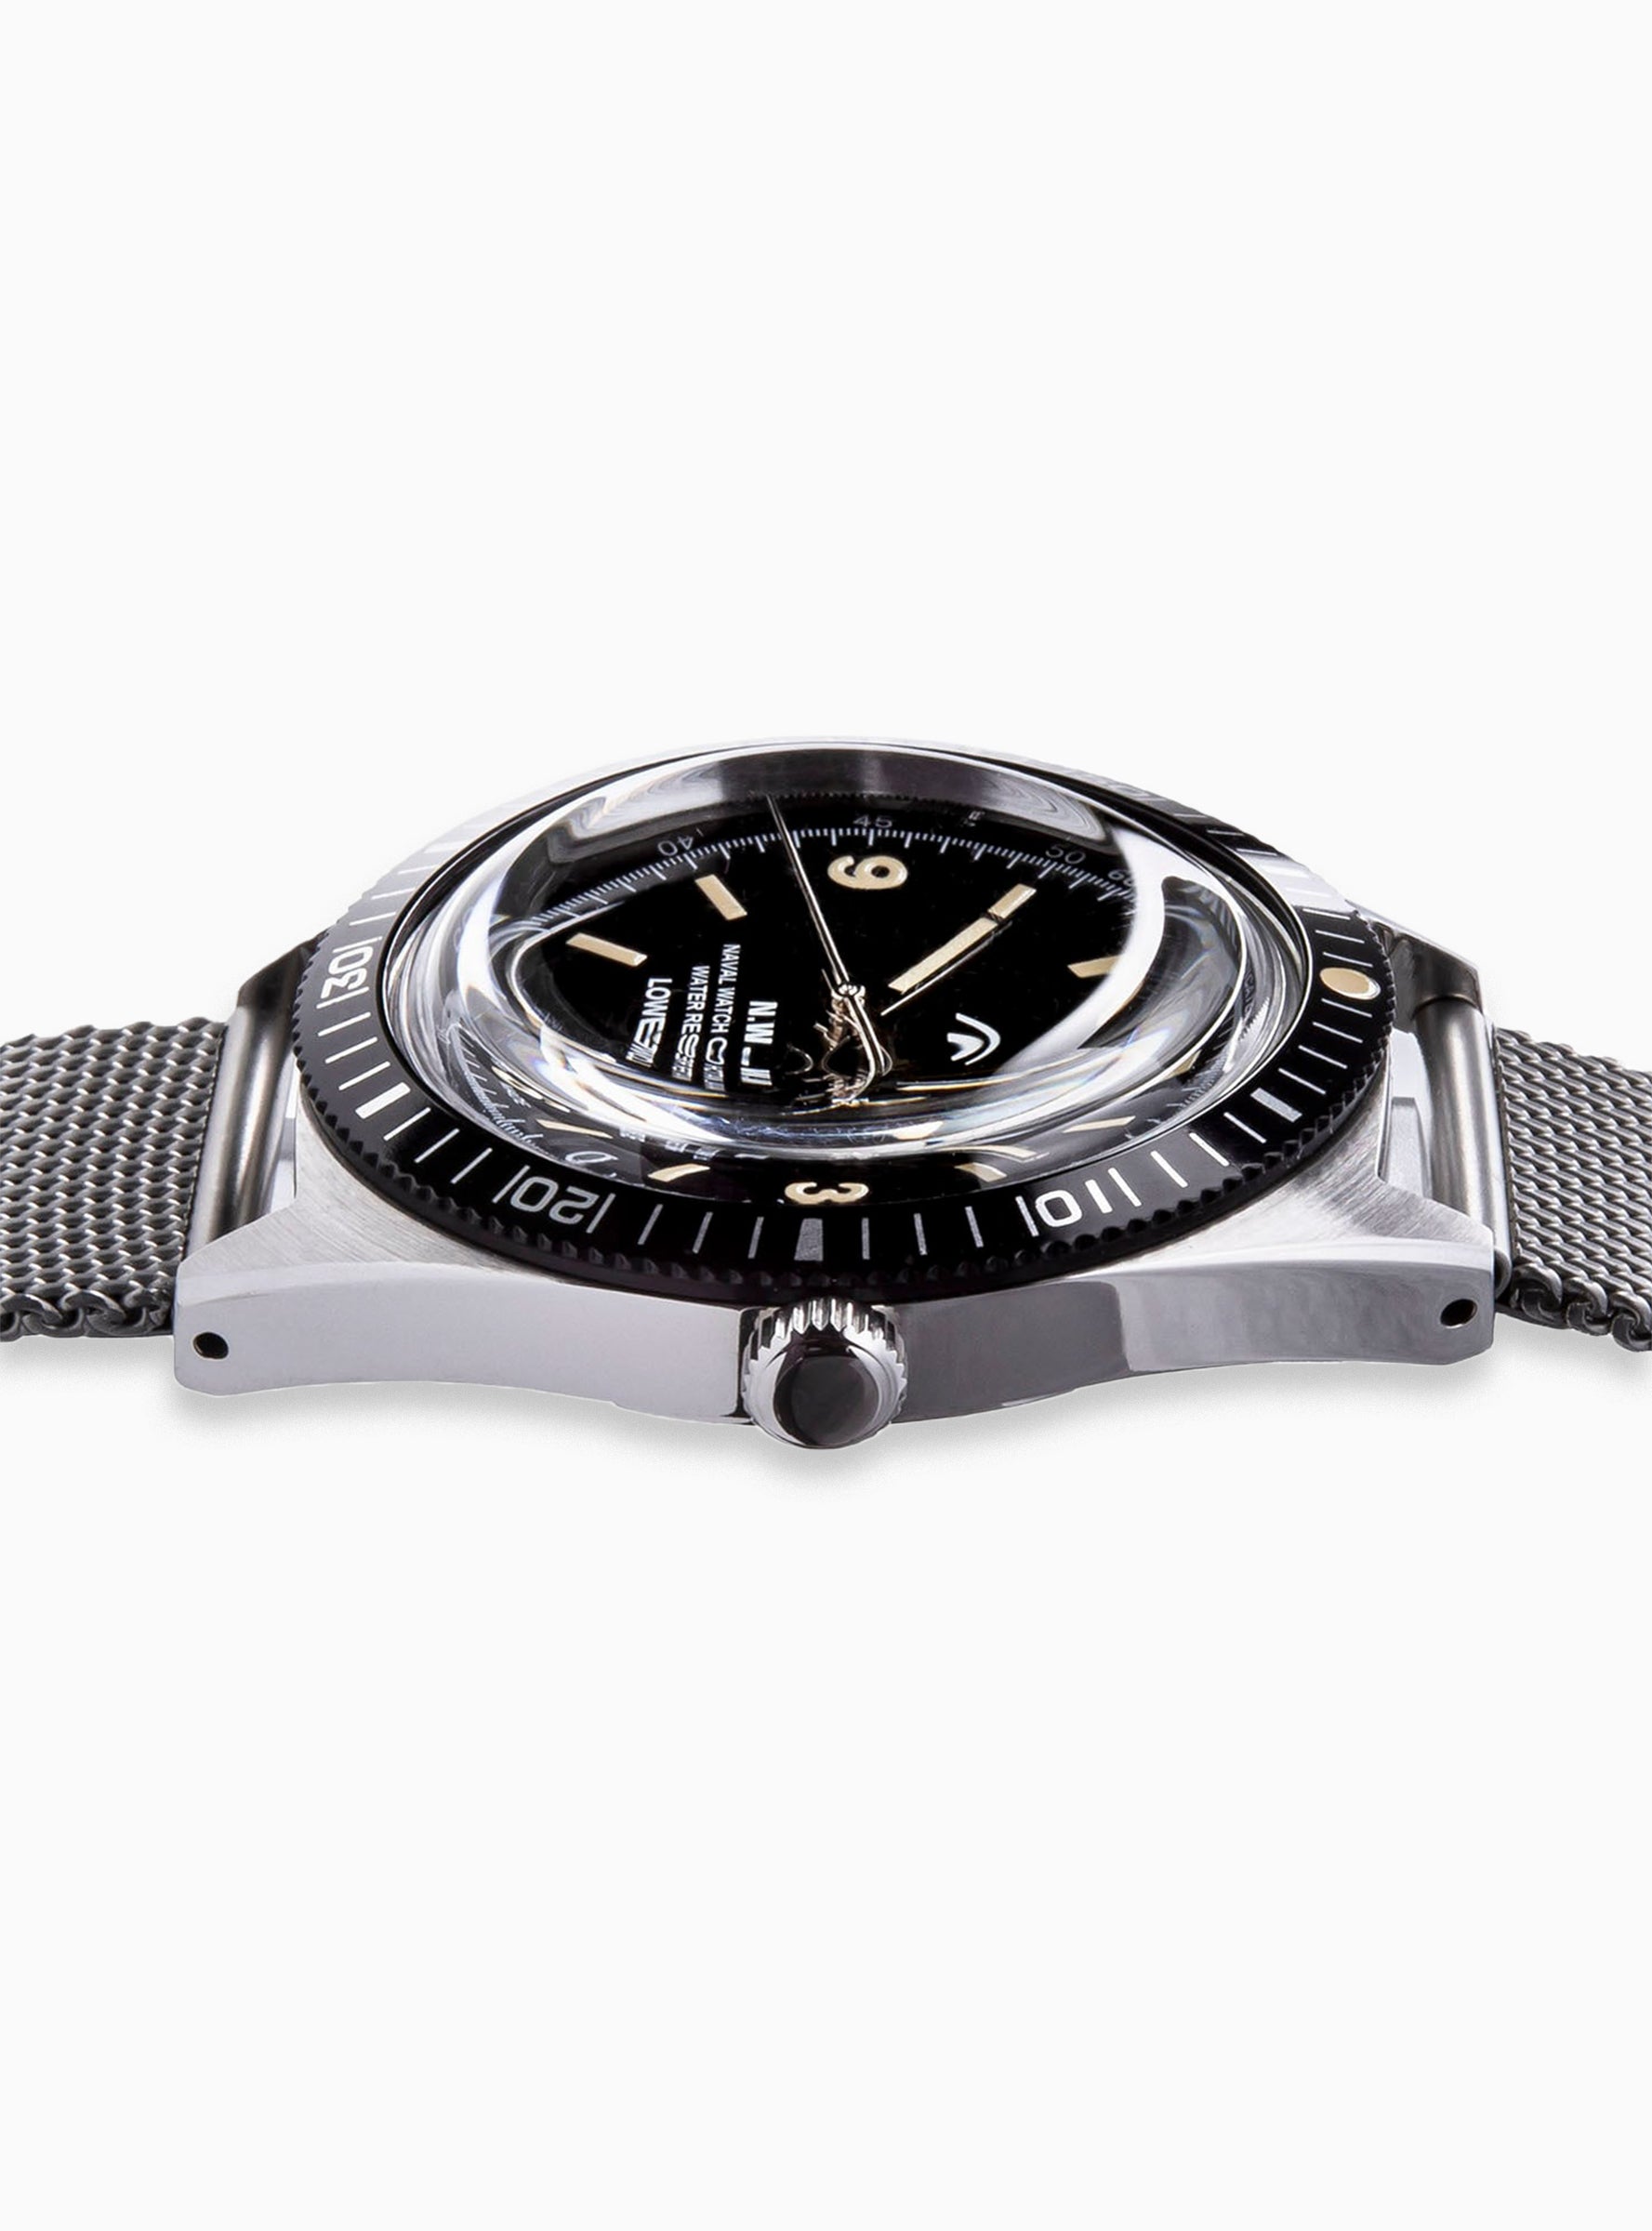 Naval FRXB001 Quartz Watch Black